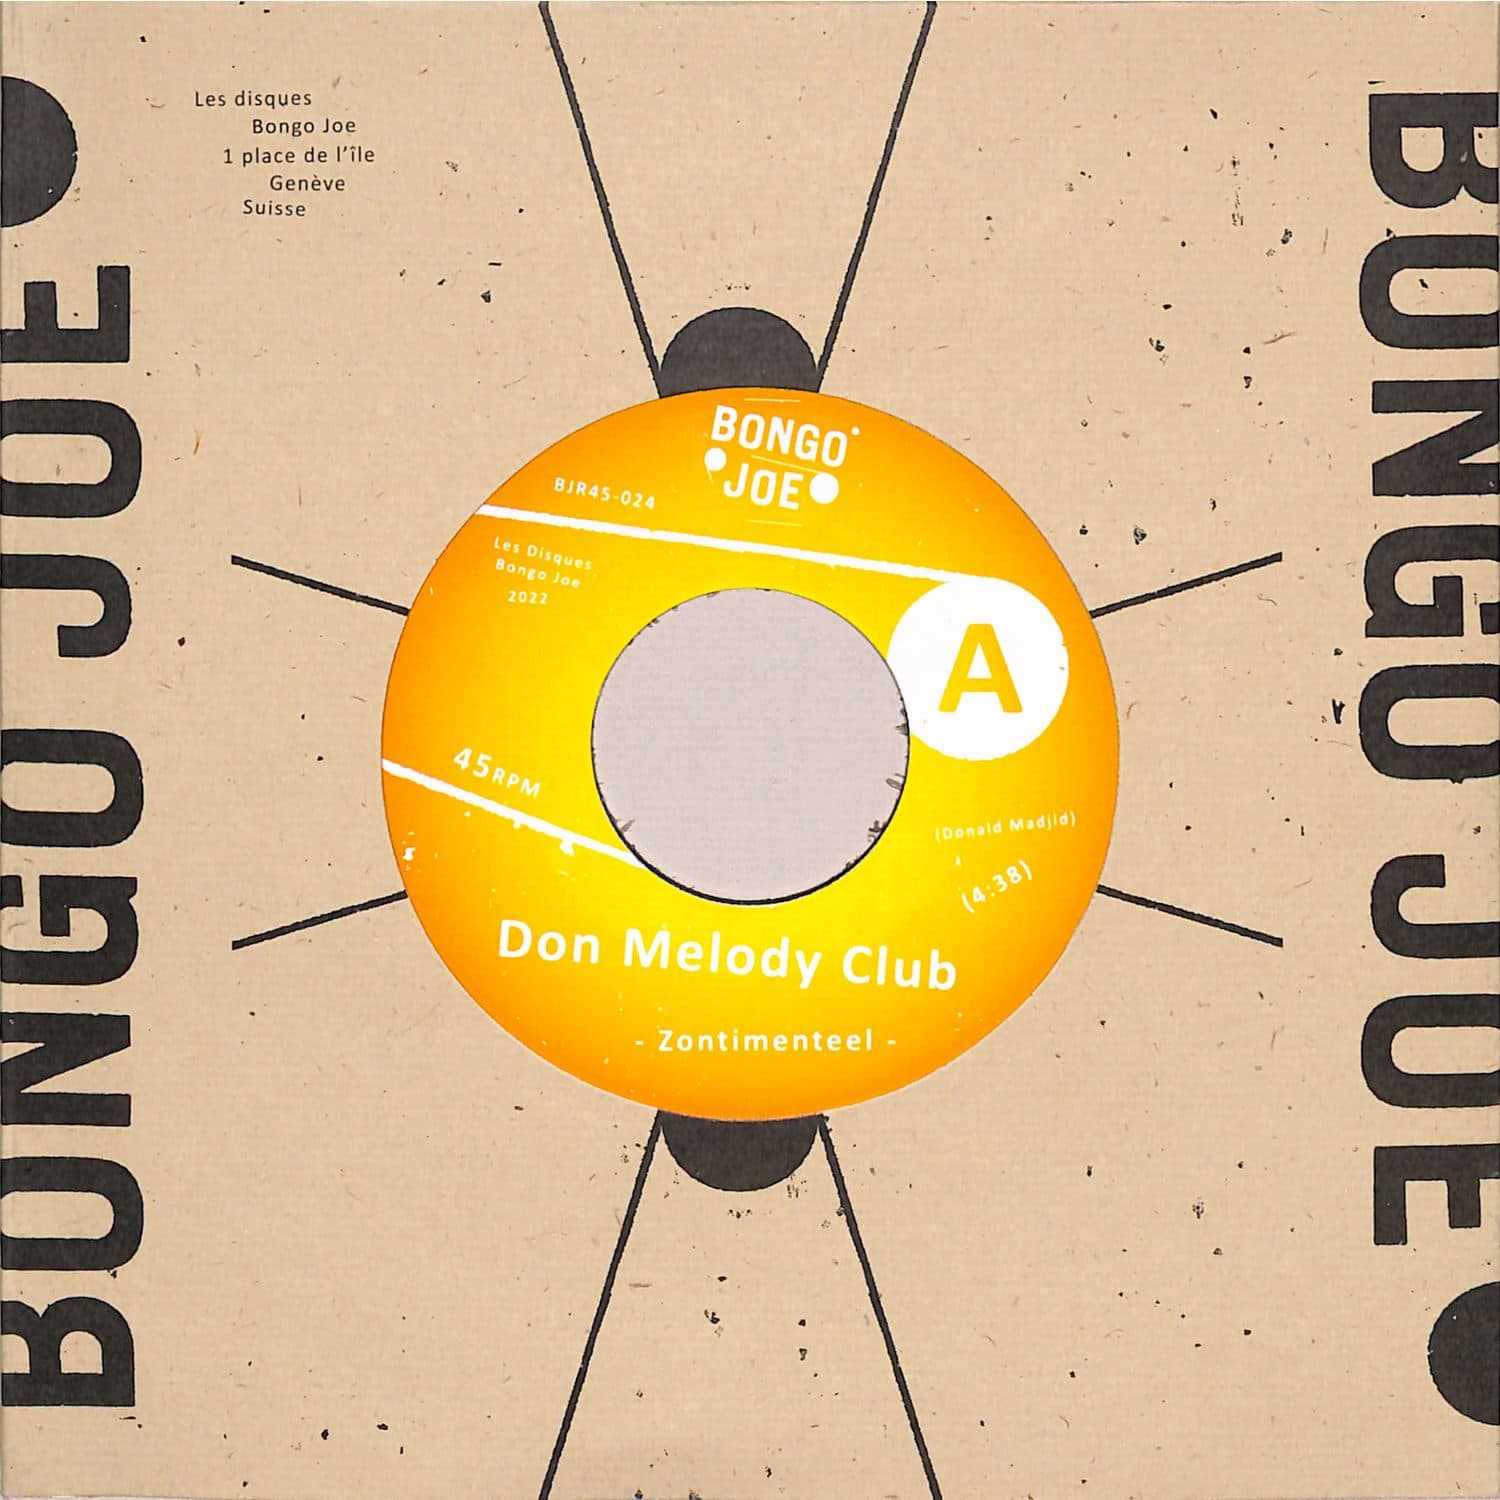 Don Melody Club - ZONTIMENTEEL / MAANDAG MOTTO 